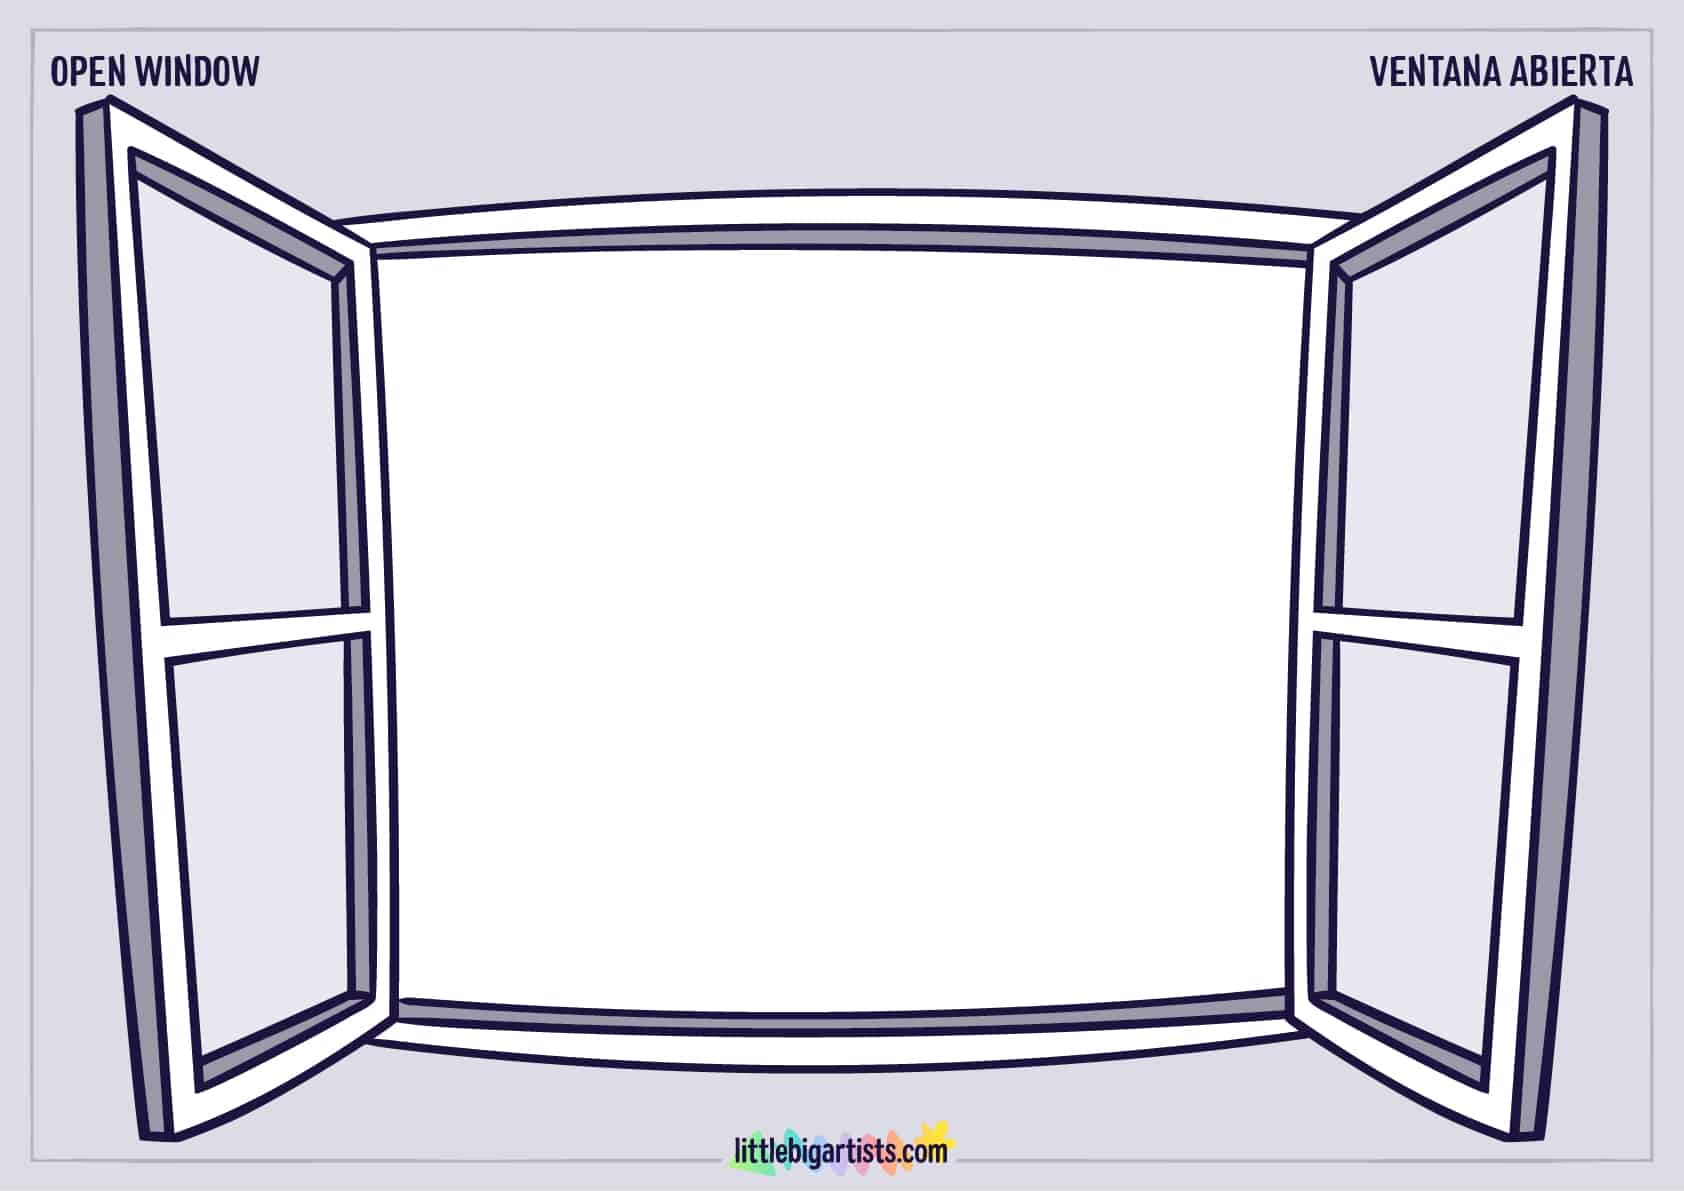 Open Window Draw Vector Images over 1300